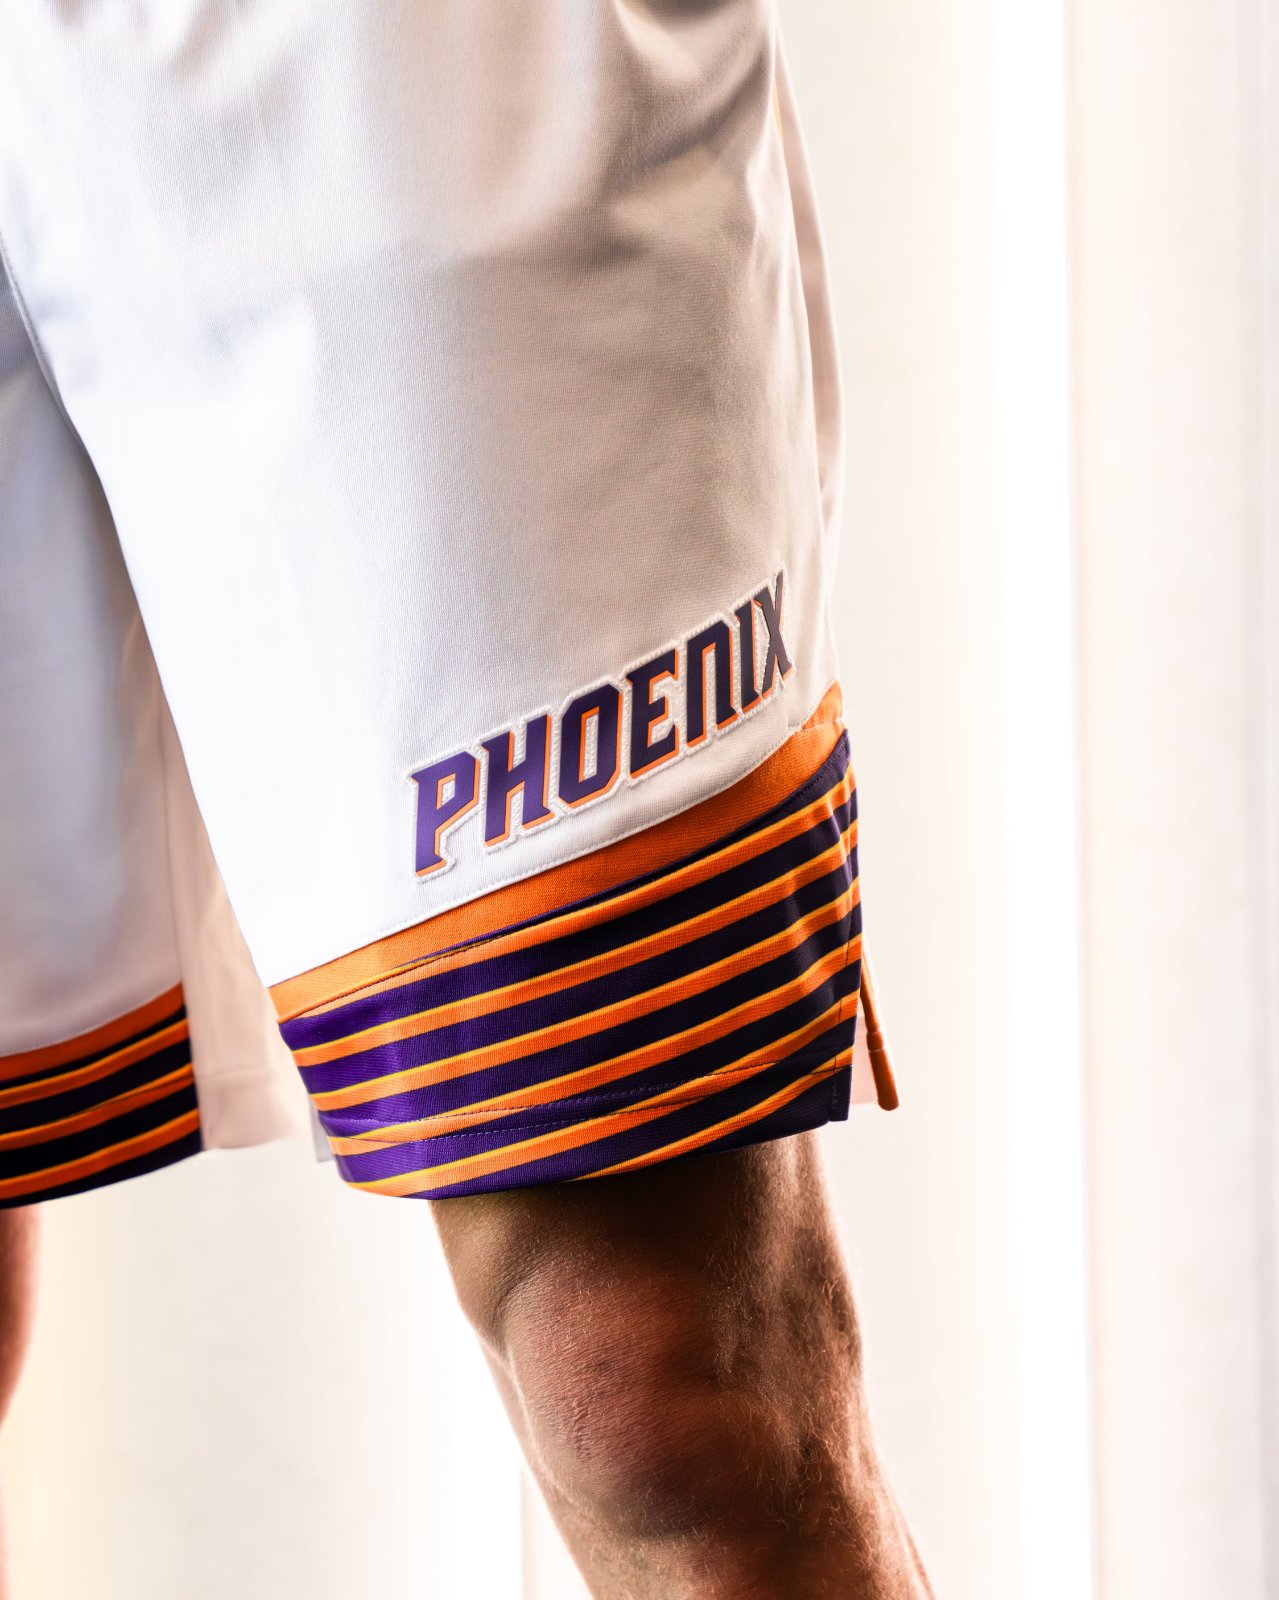 Phoenix Suns unveil new alternate jersey, slogan, court